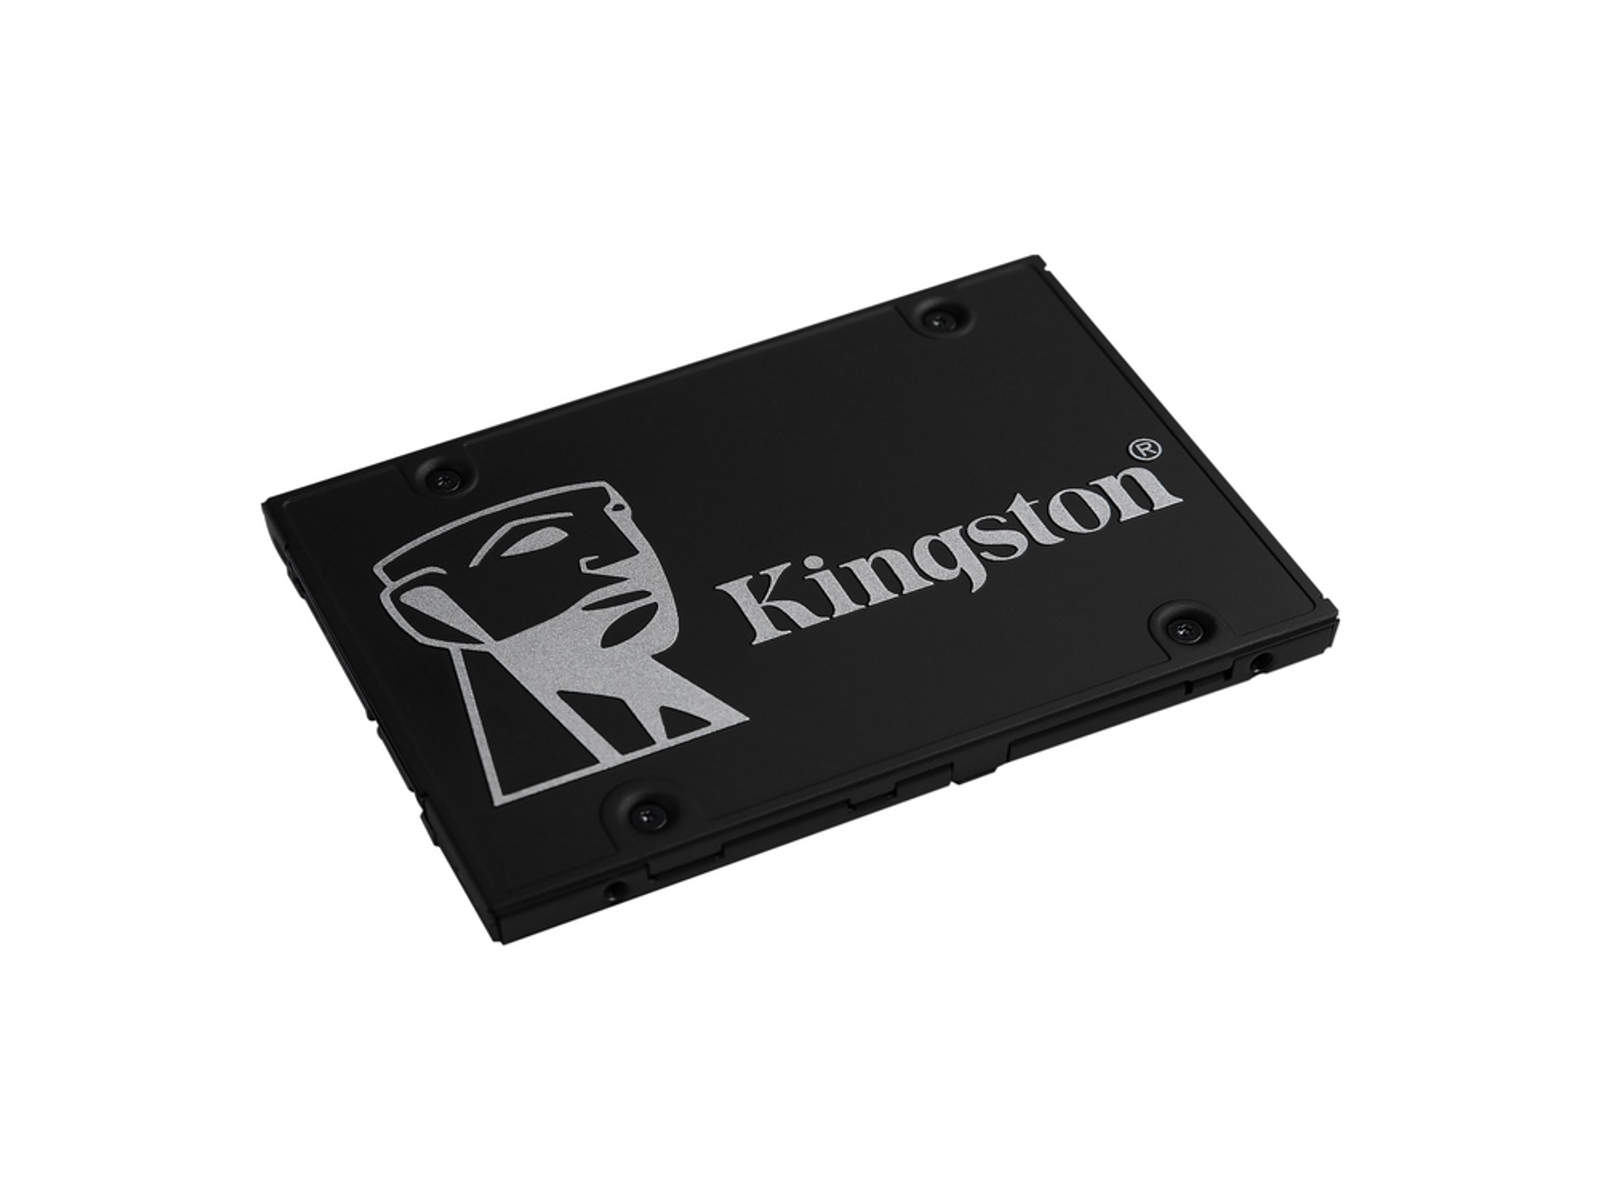 KINGSTON KC600, 1 2,5 TB, SSD, intern Zoll